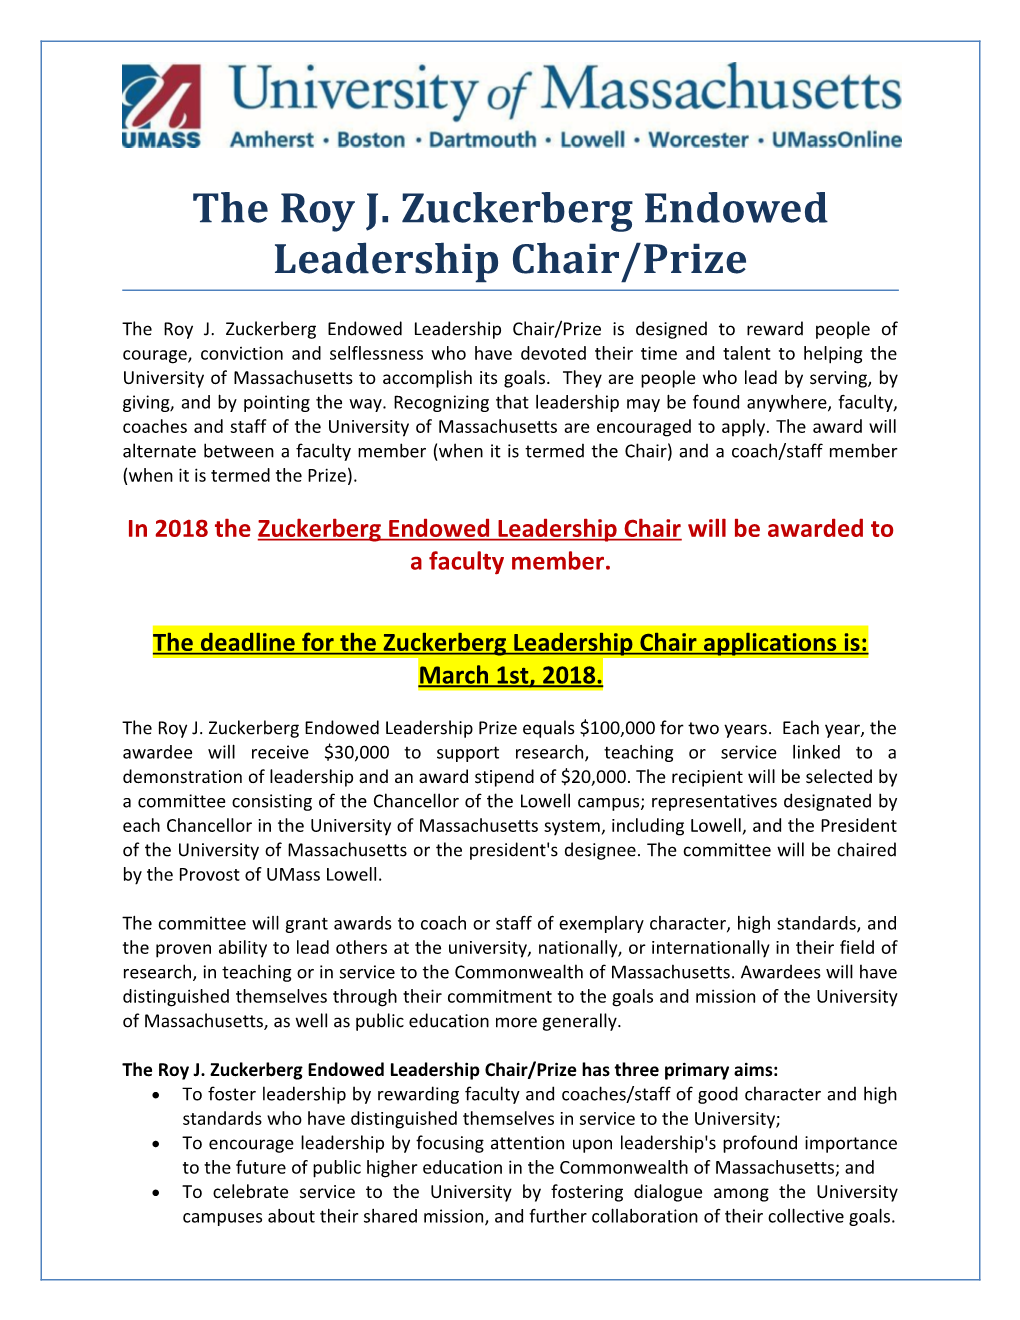 The Roy Zuckerberg Leadership Prize Application